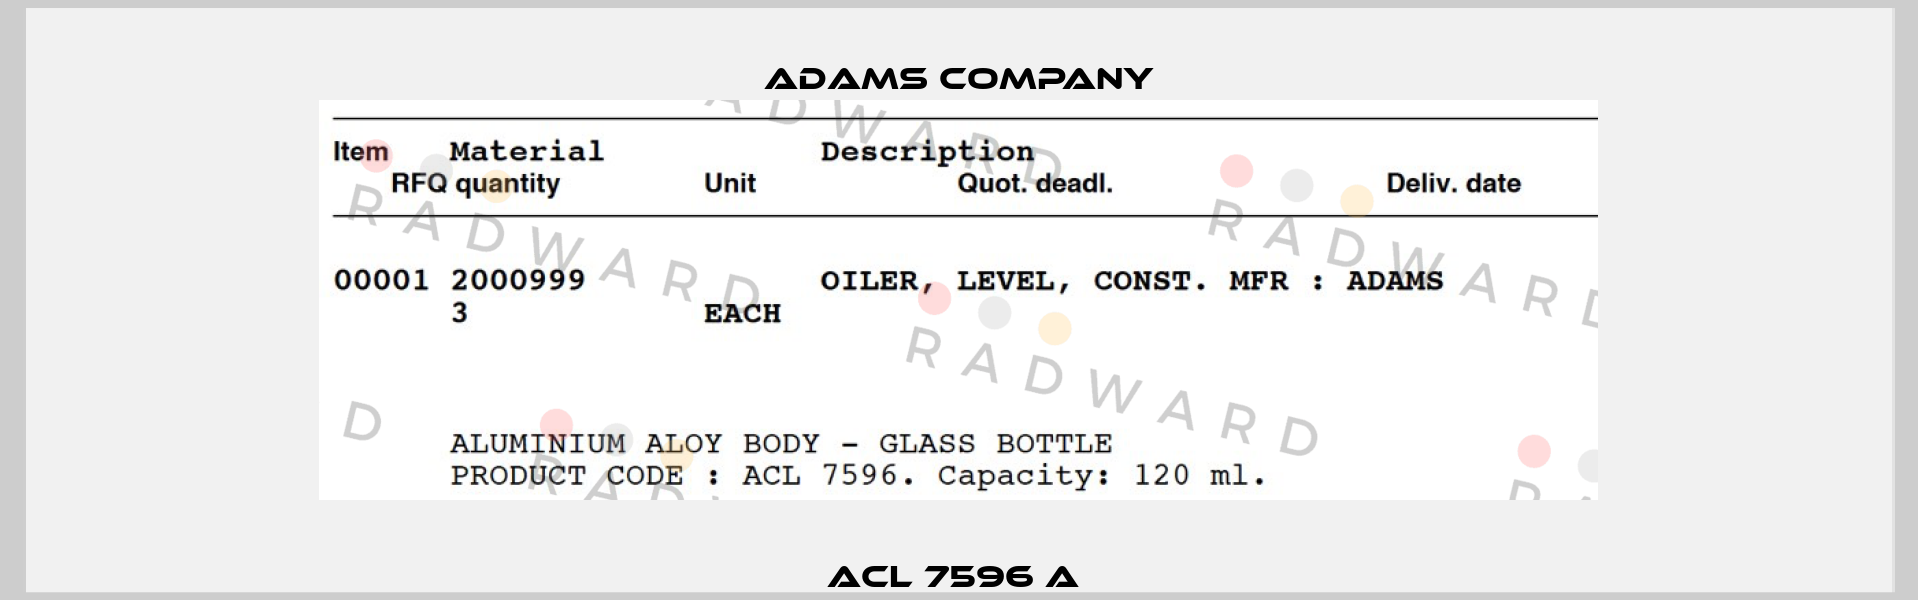 ACL 7596 A  Adams Company